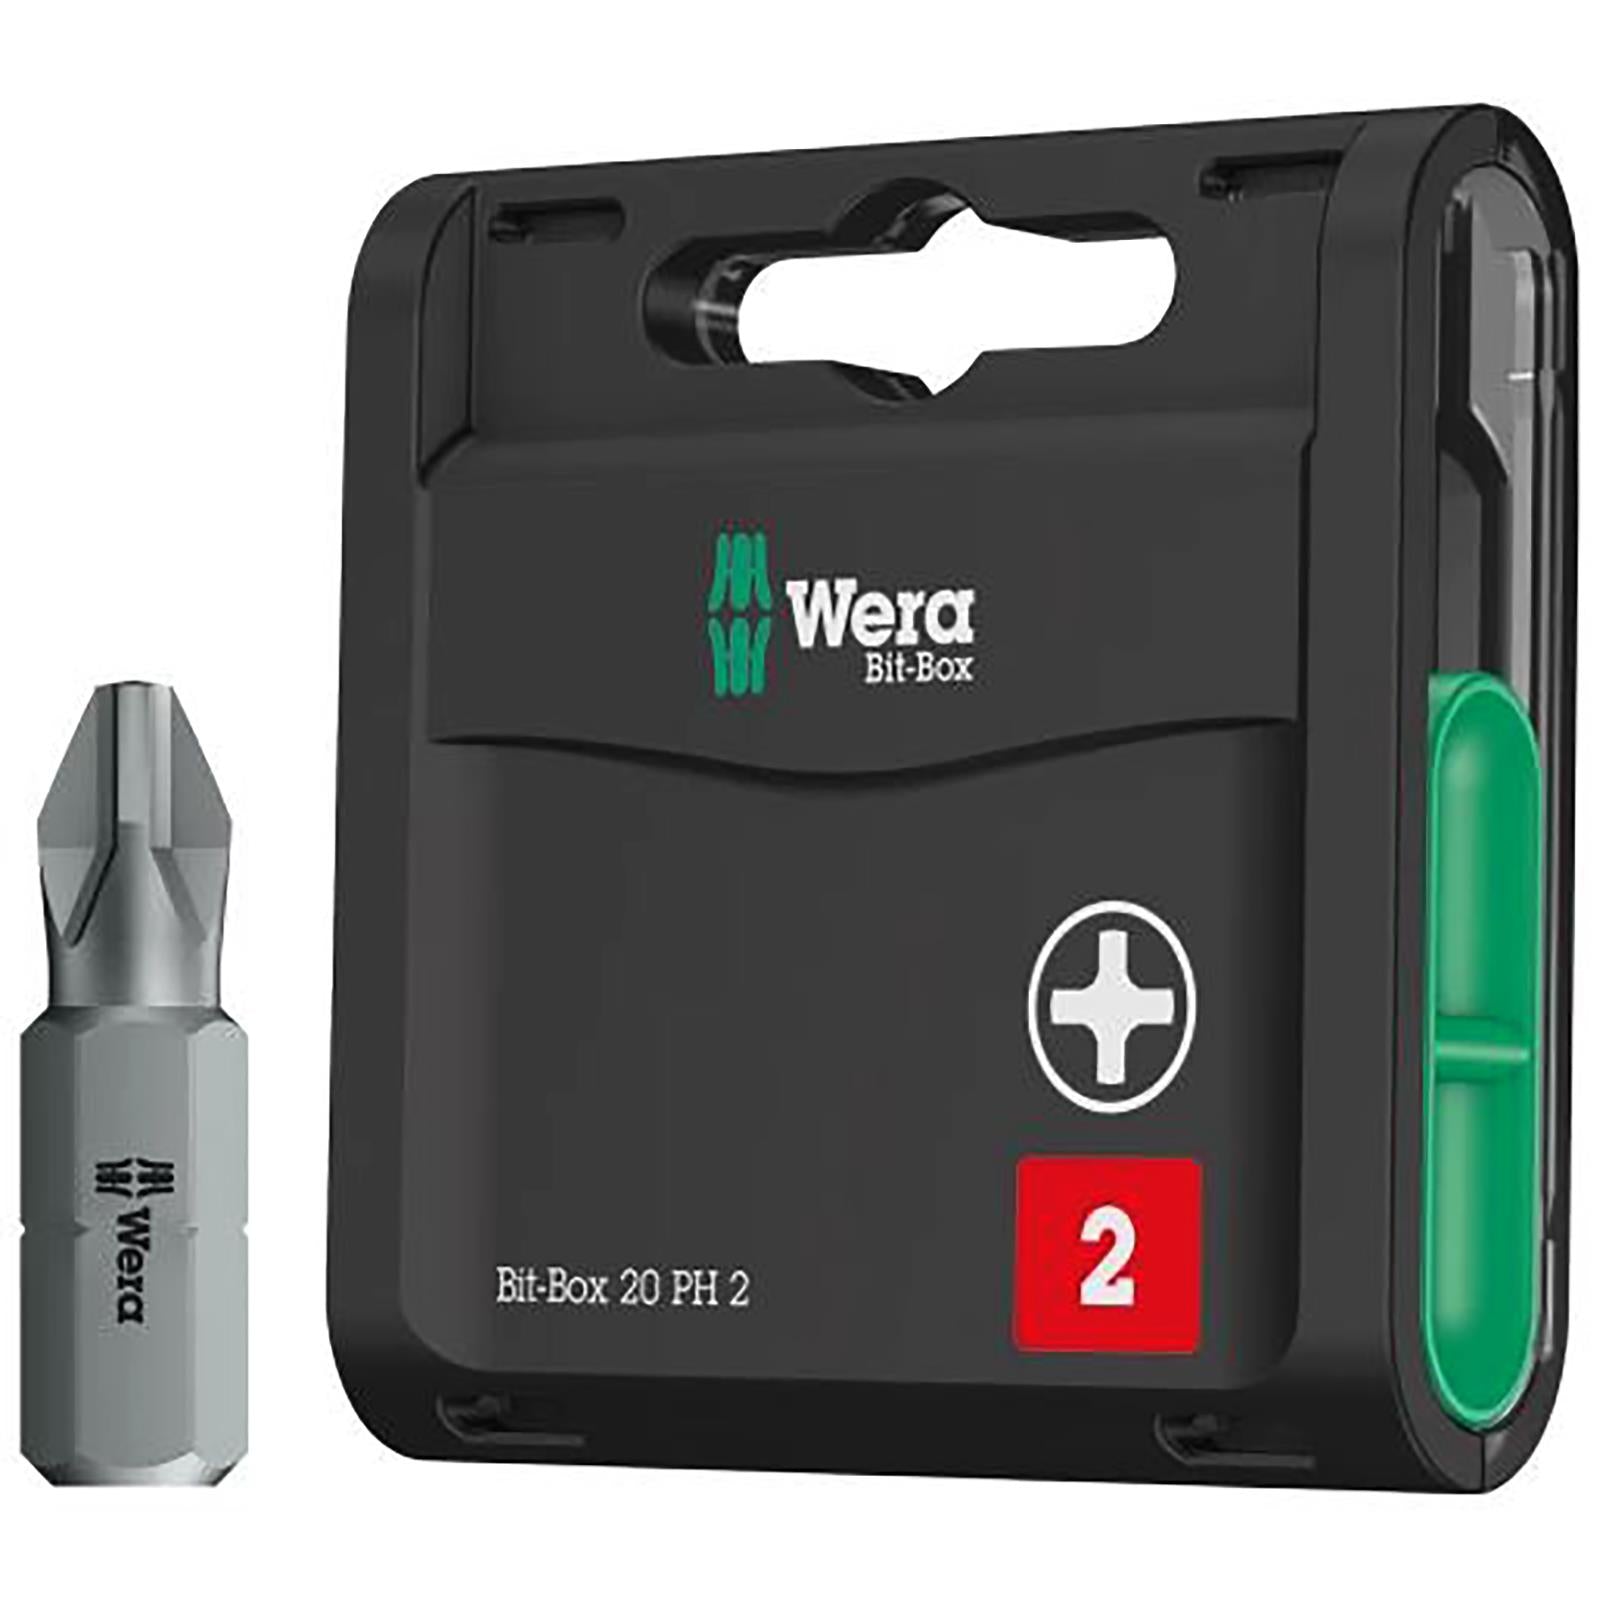 Wera Phillips Screwdriver Bits 20 Pack PH2 x 25mm Bit Box Extra Hard